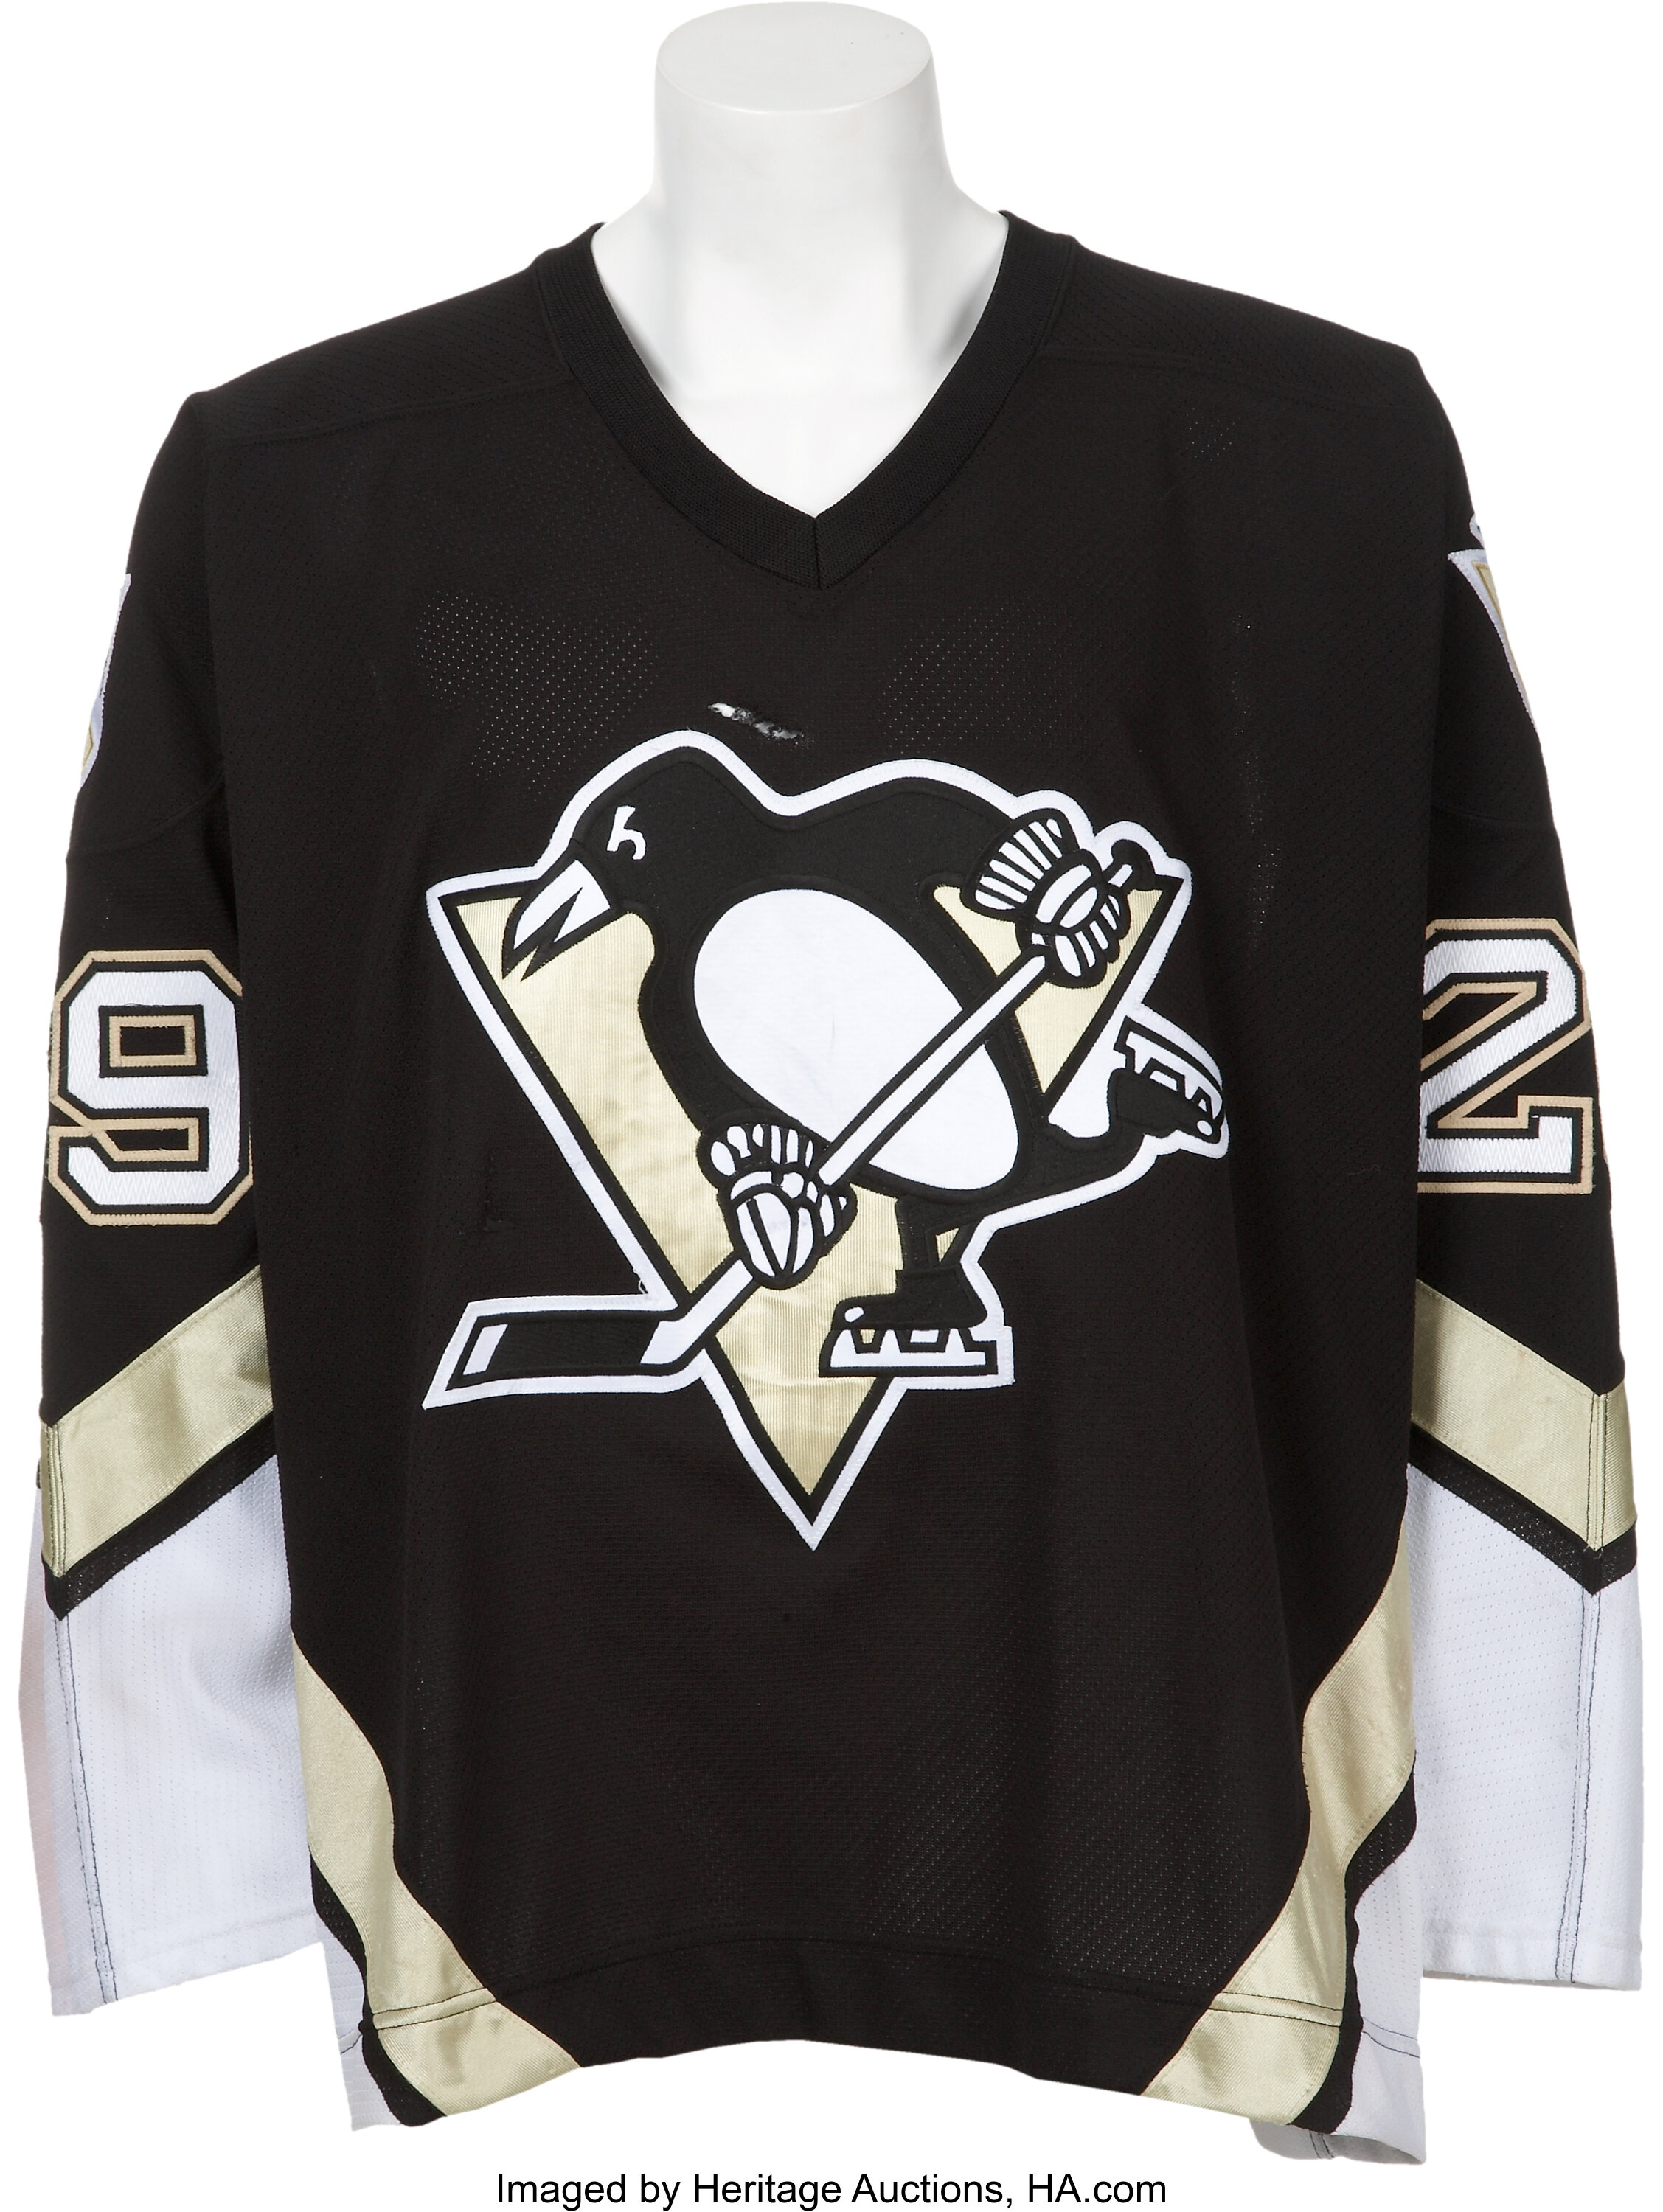 Marc Andre Fleury Penguins jersey